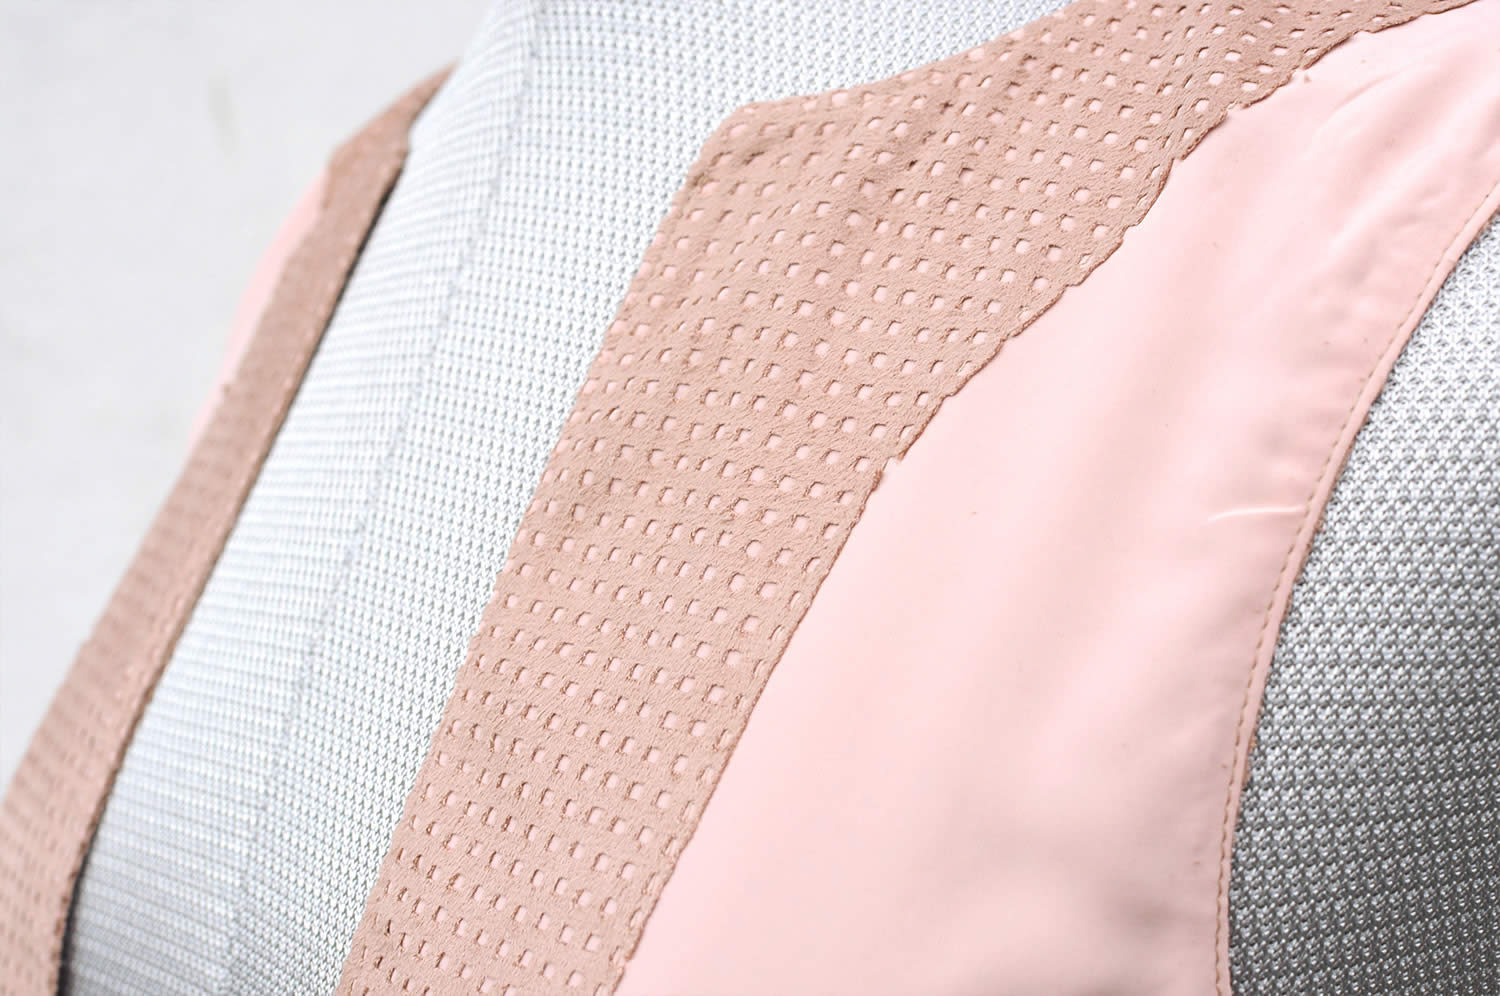 Ladulsatina Sewing Blog - Aestiva sleeveless short vest by Wearologie in laser-cut alcantara and silk - inside details